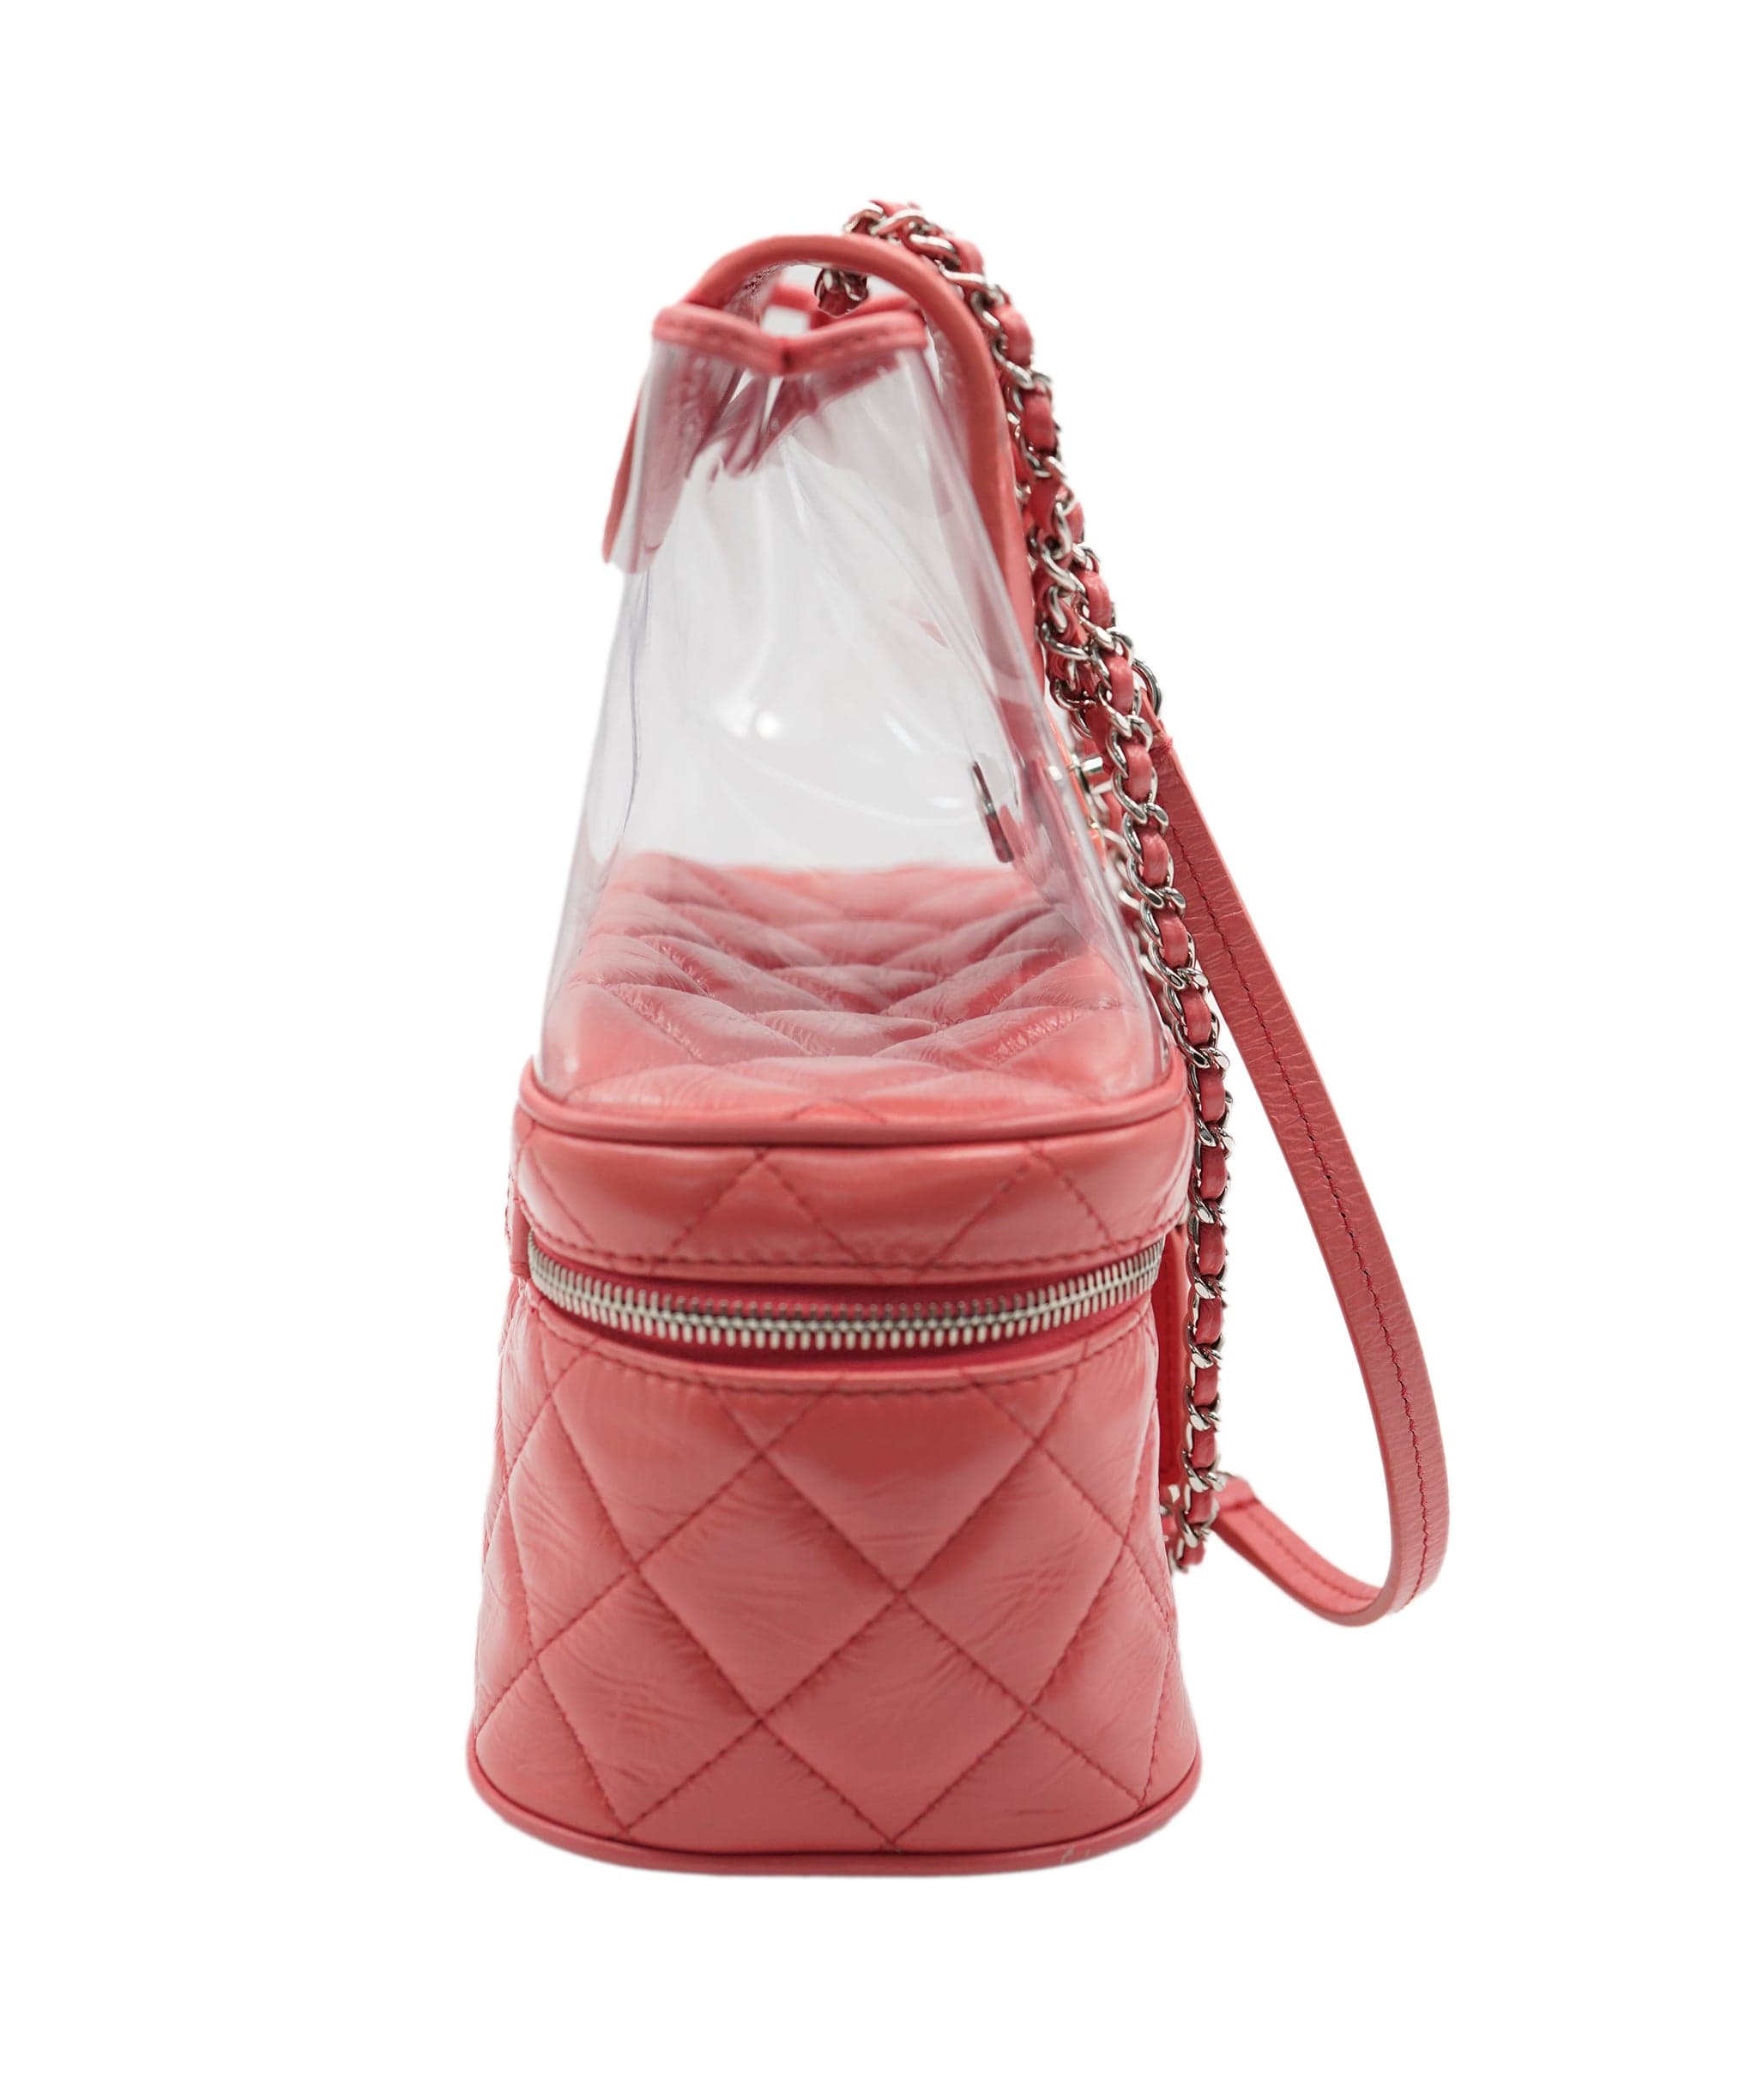 Chanel chanel pink/pvc bag AVC1229